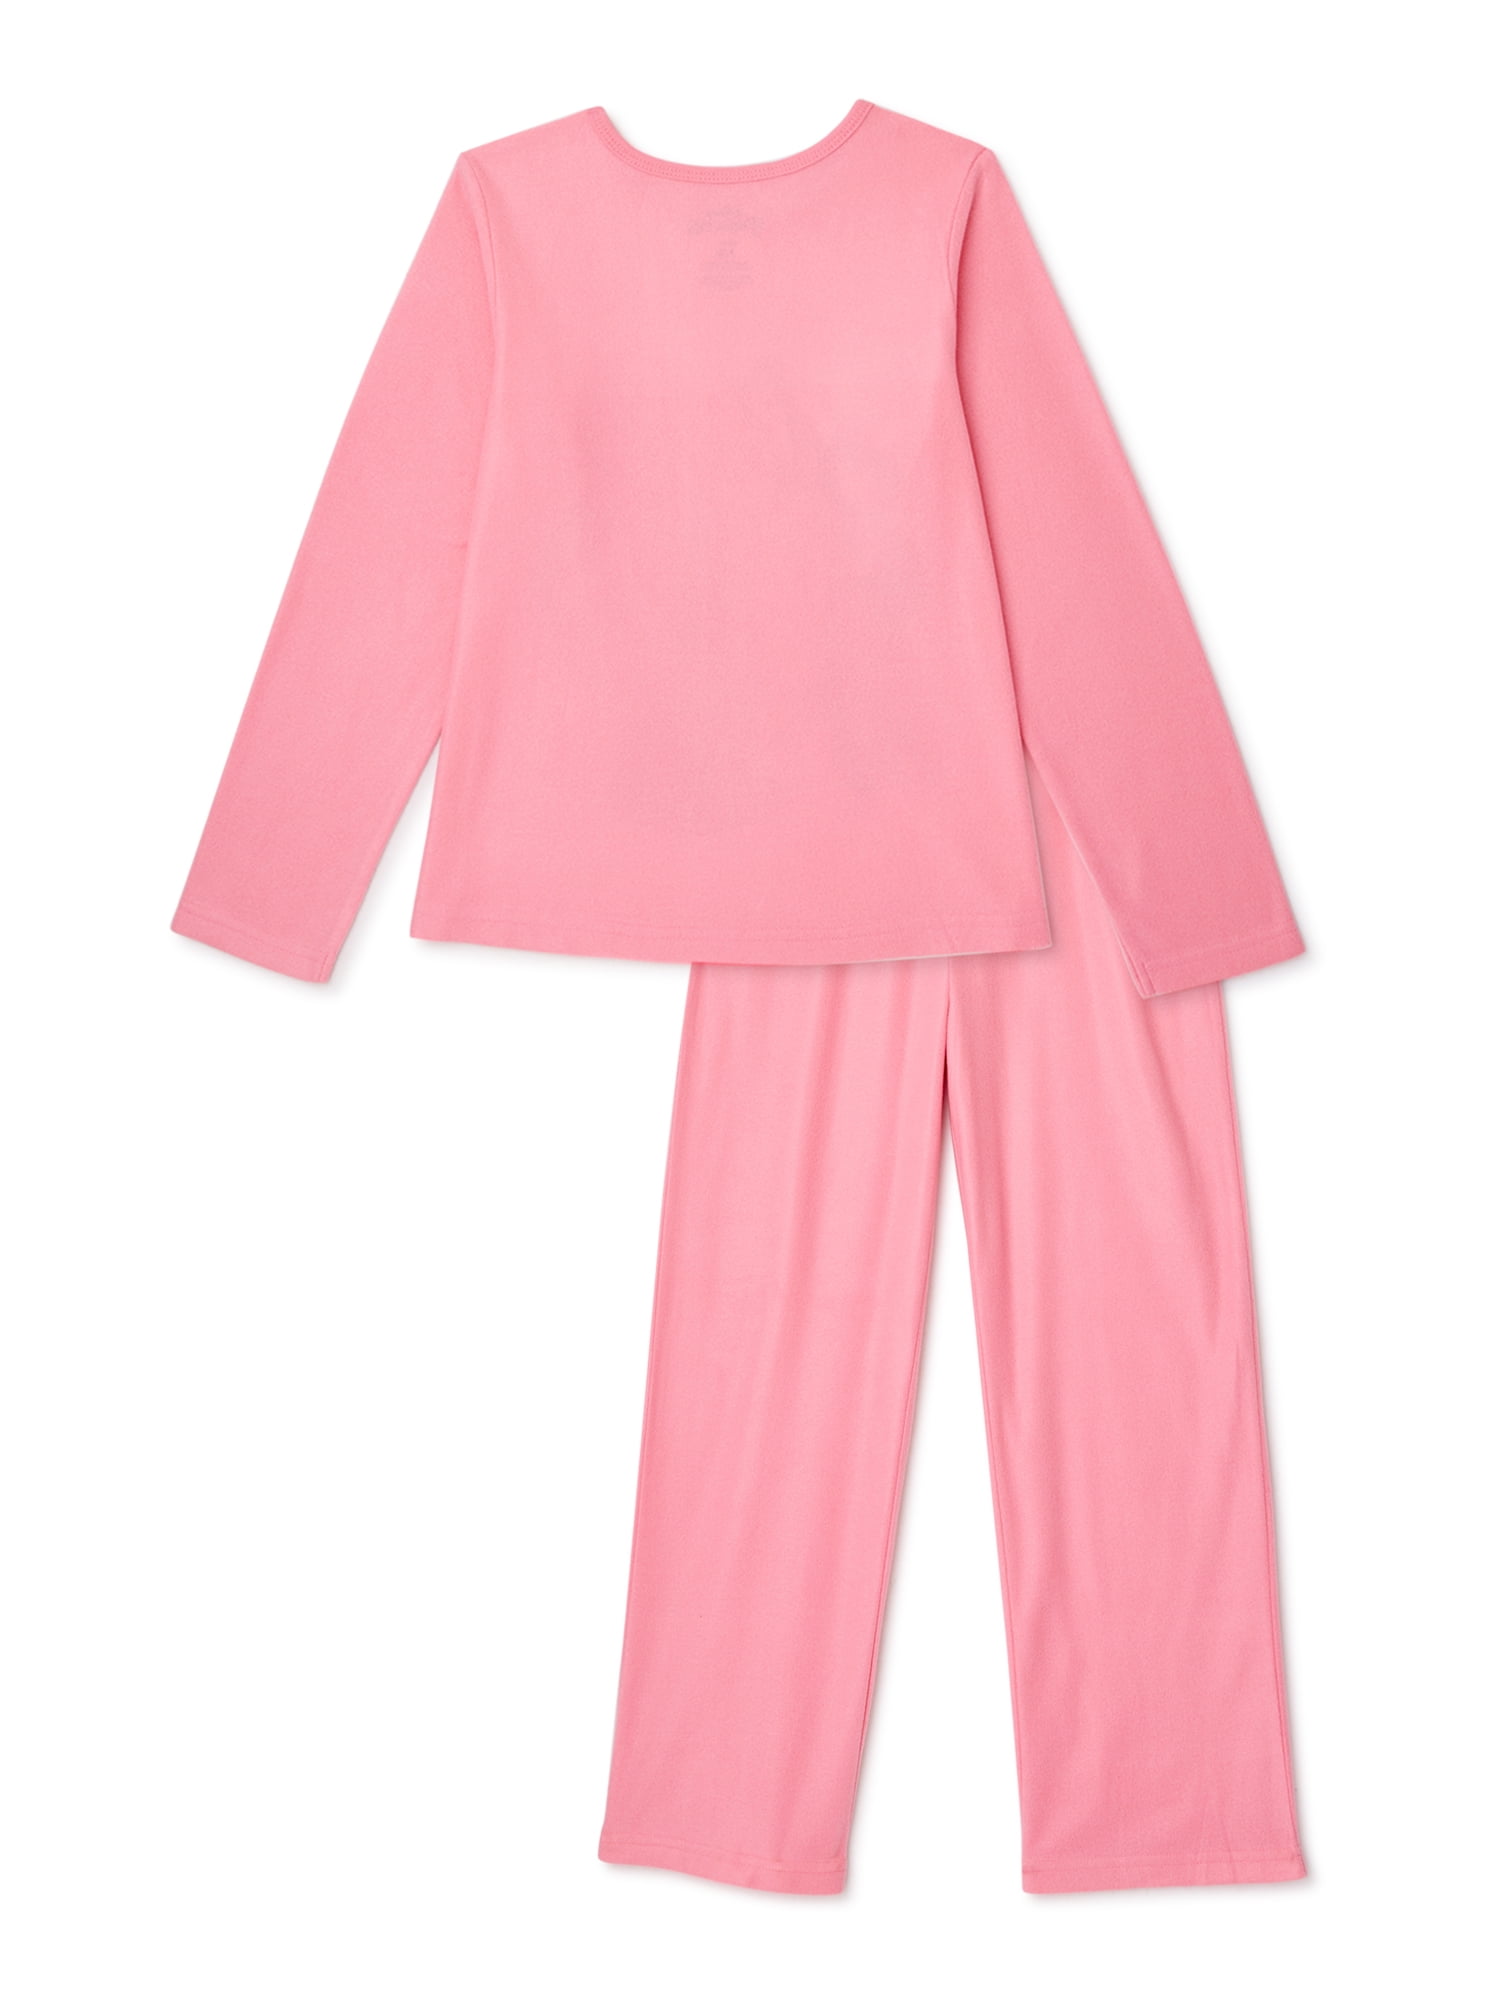 Disney Princess Girls Flannel 2Pc Set Pajama Pink Sz 4/6 - NWT $32